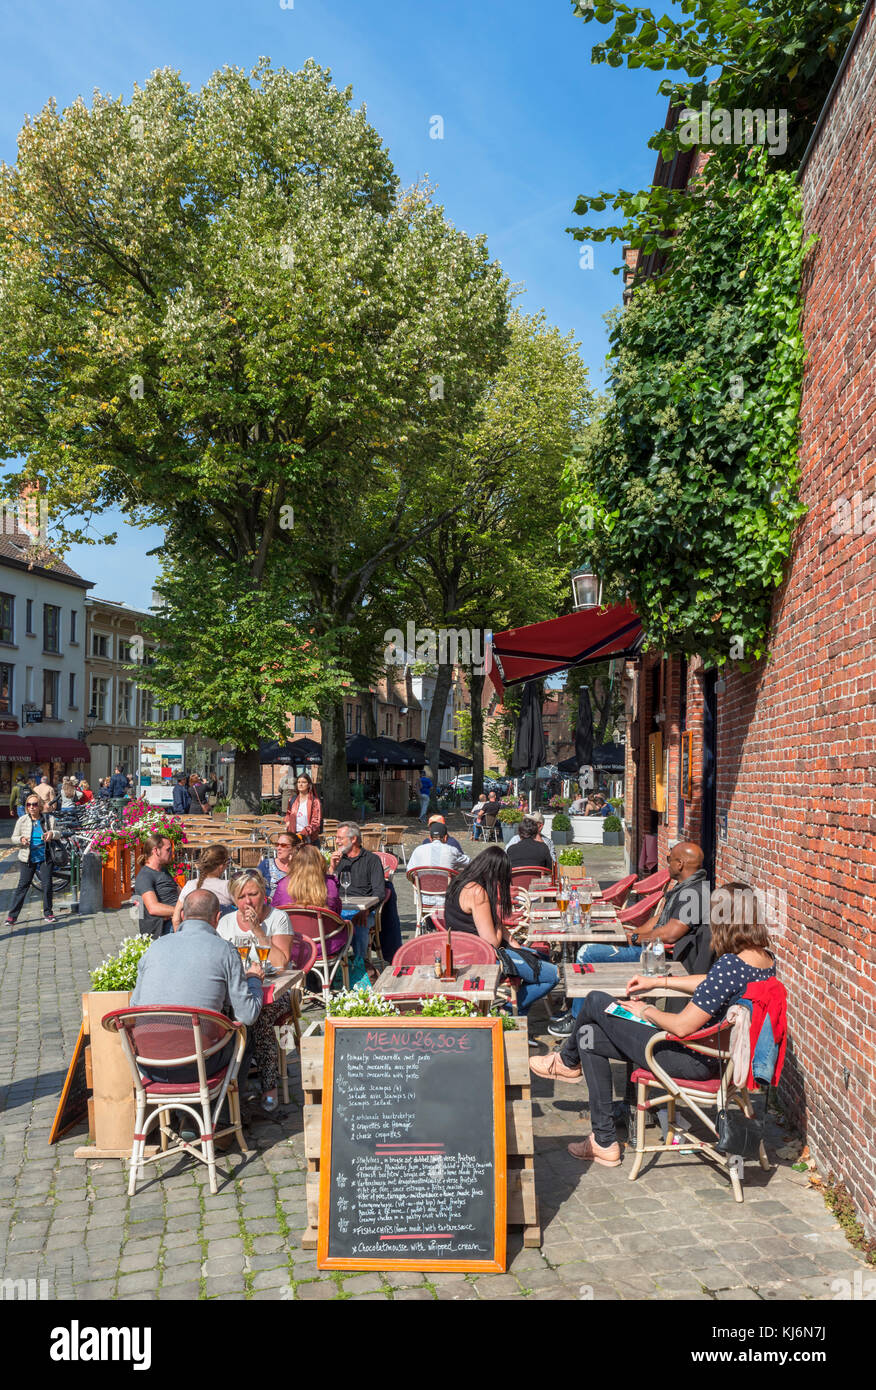 Sidewalk cafe sur Walplein dans le centre-ville, Bruges (Brugge), Belgique. Banque D'Images